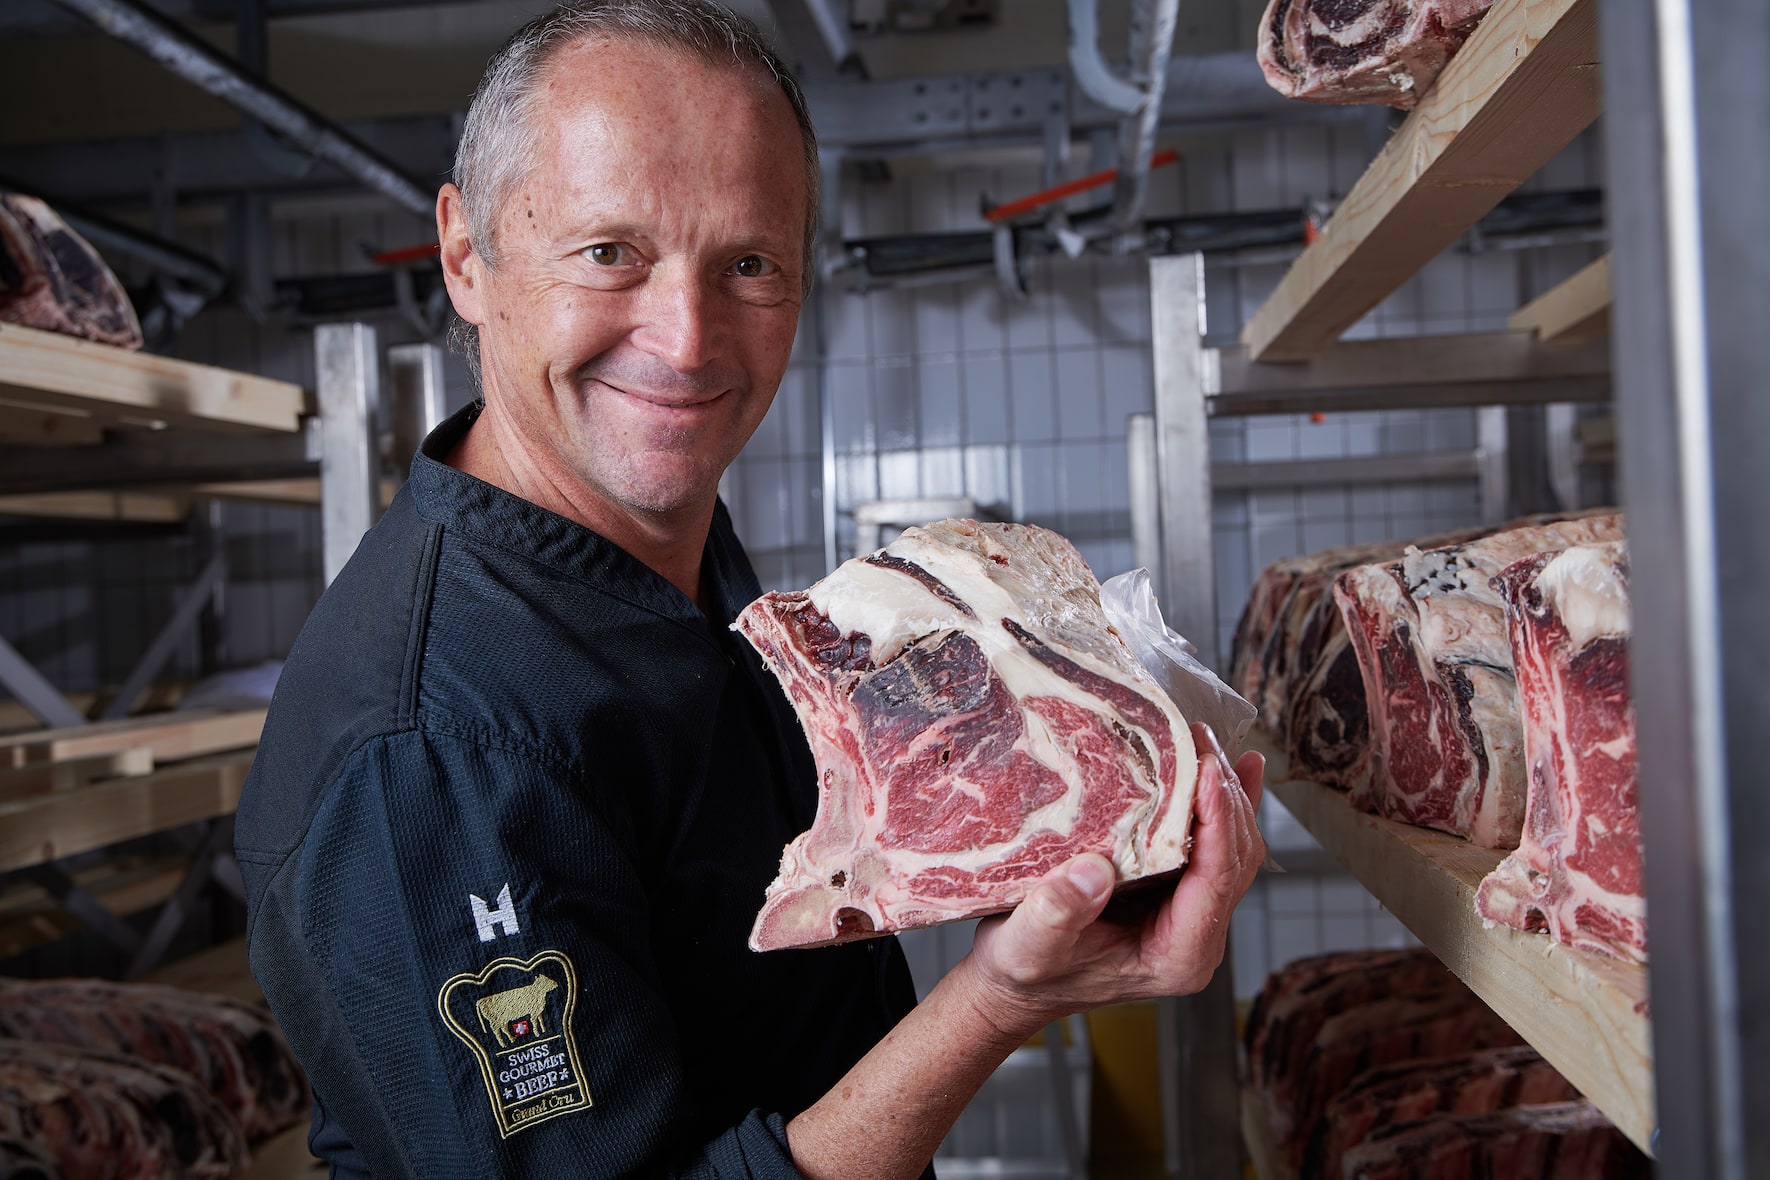 Morceaux de viande de porc - Viande Suisse